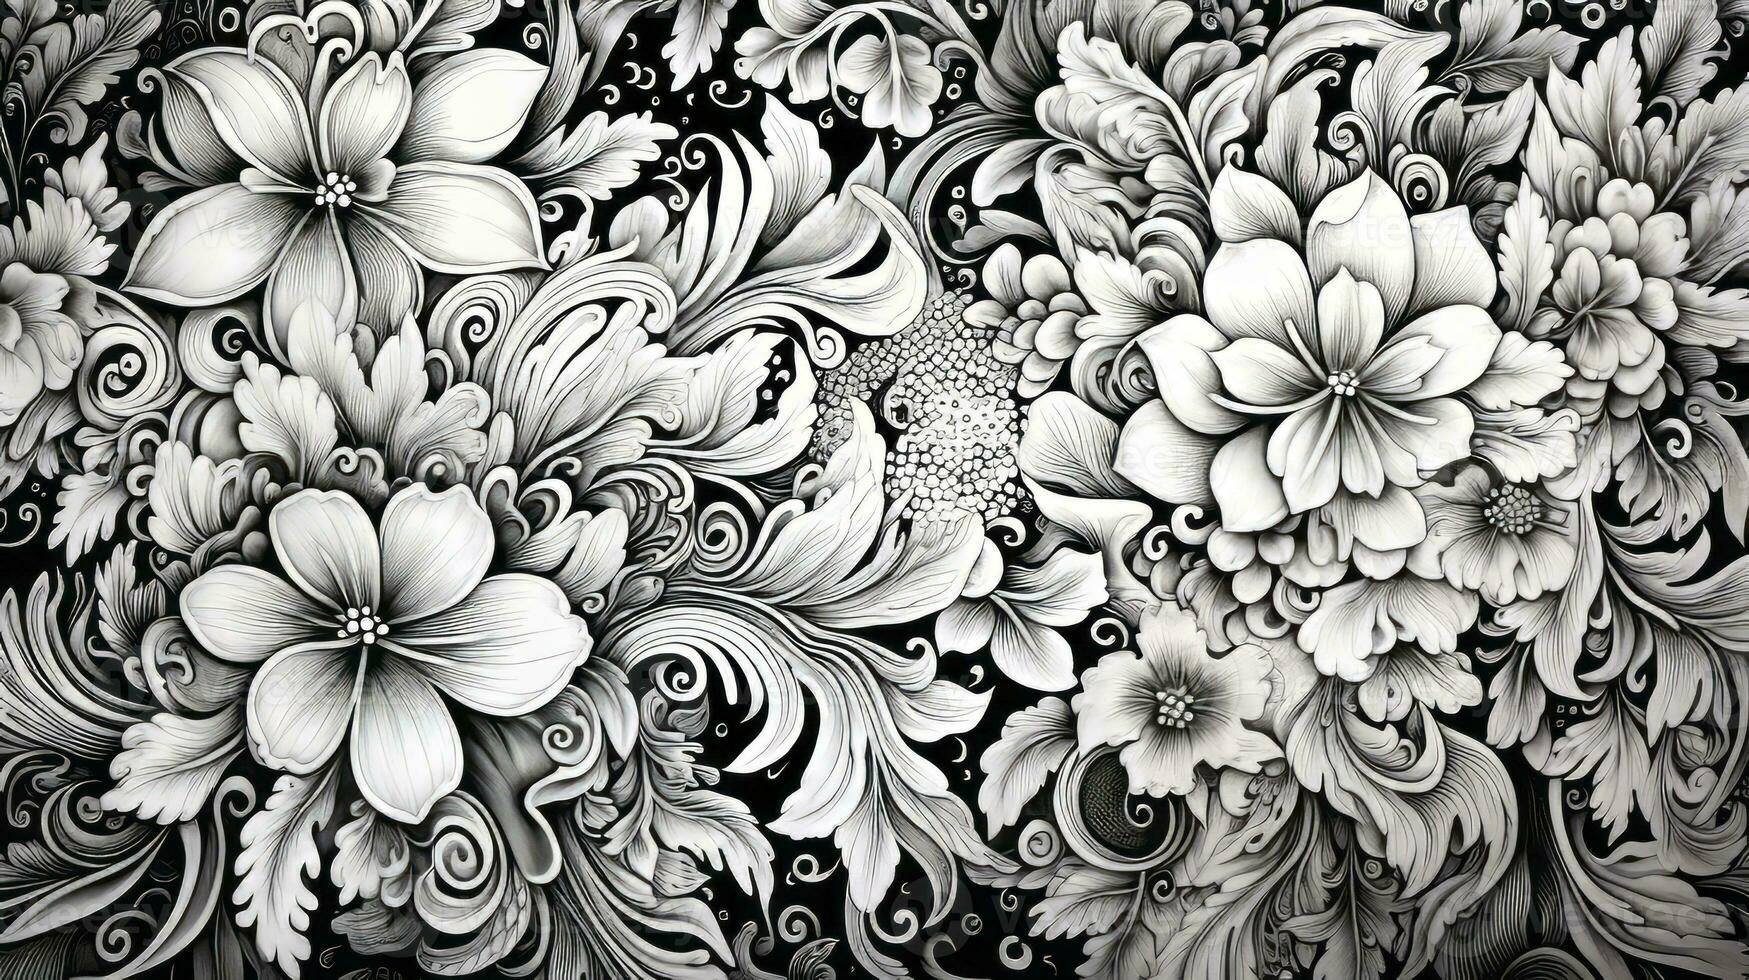 ai gerado abstrato floral padronizar dentro Preto e branco cores. gótico estético foto